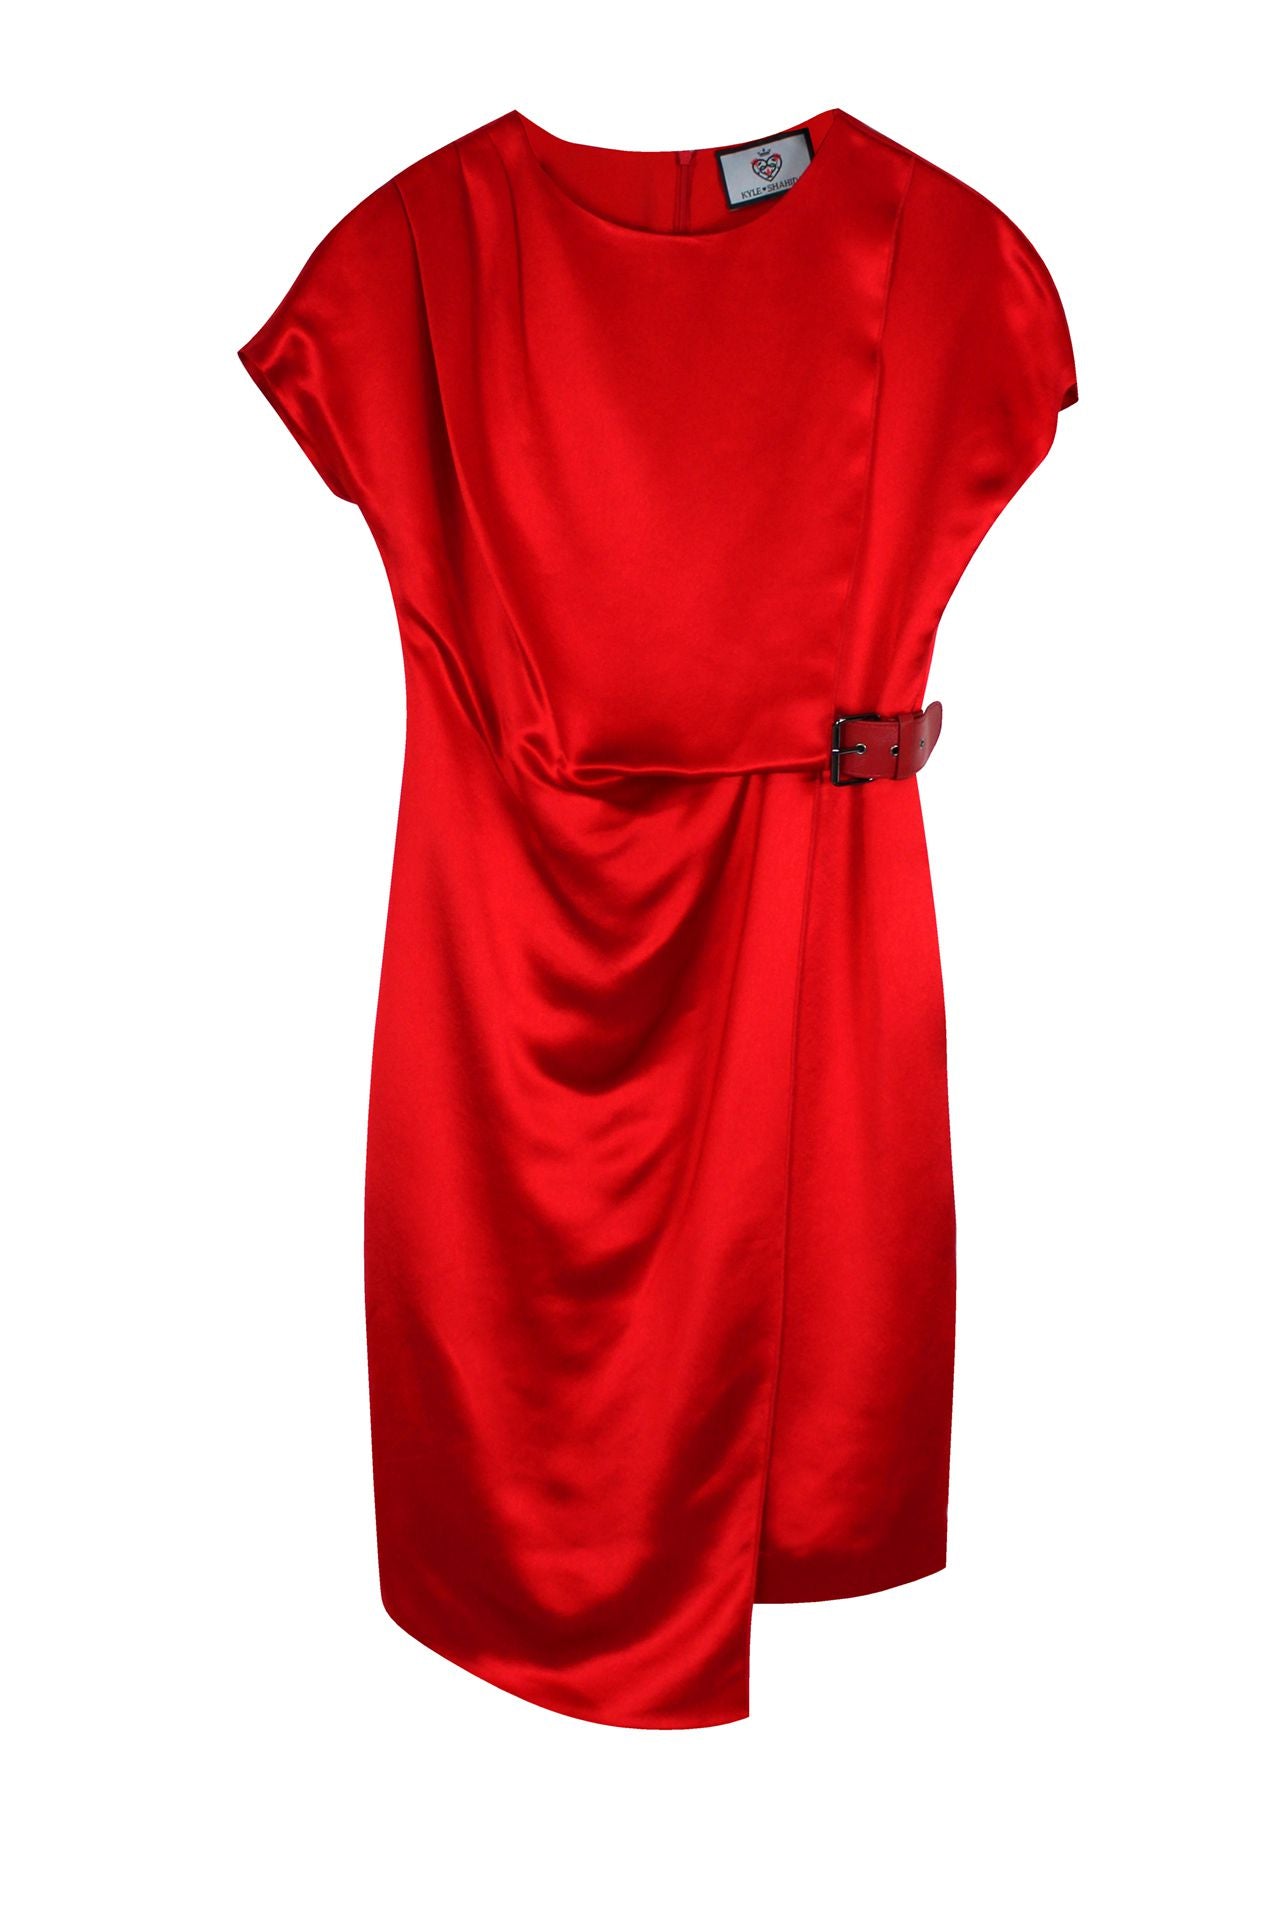 Designer-Mini-Dress-In-Red-By-Kyle-Richard